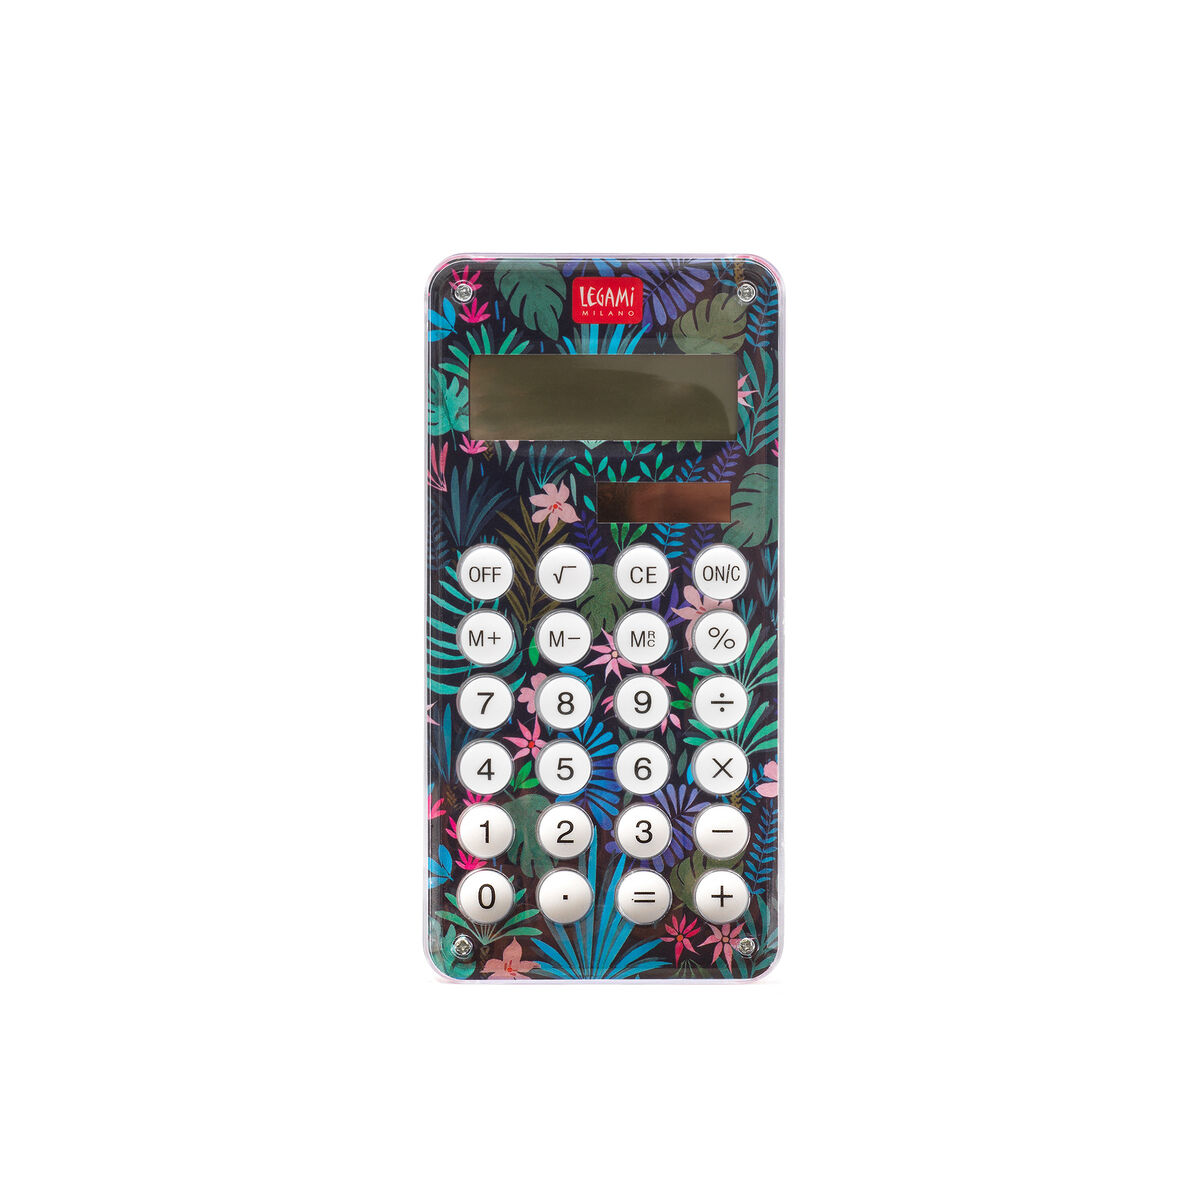 Calculatrice - Calcoolator, , zoo